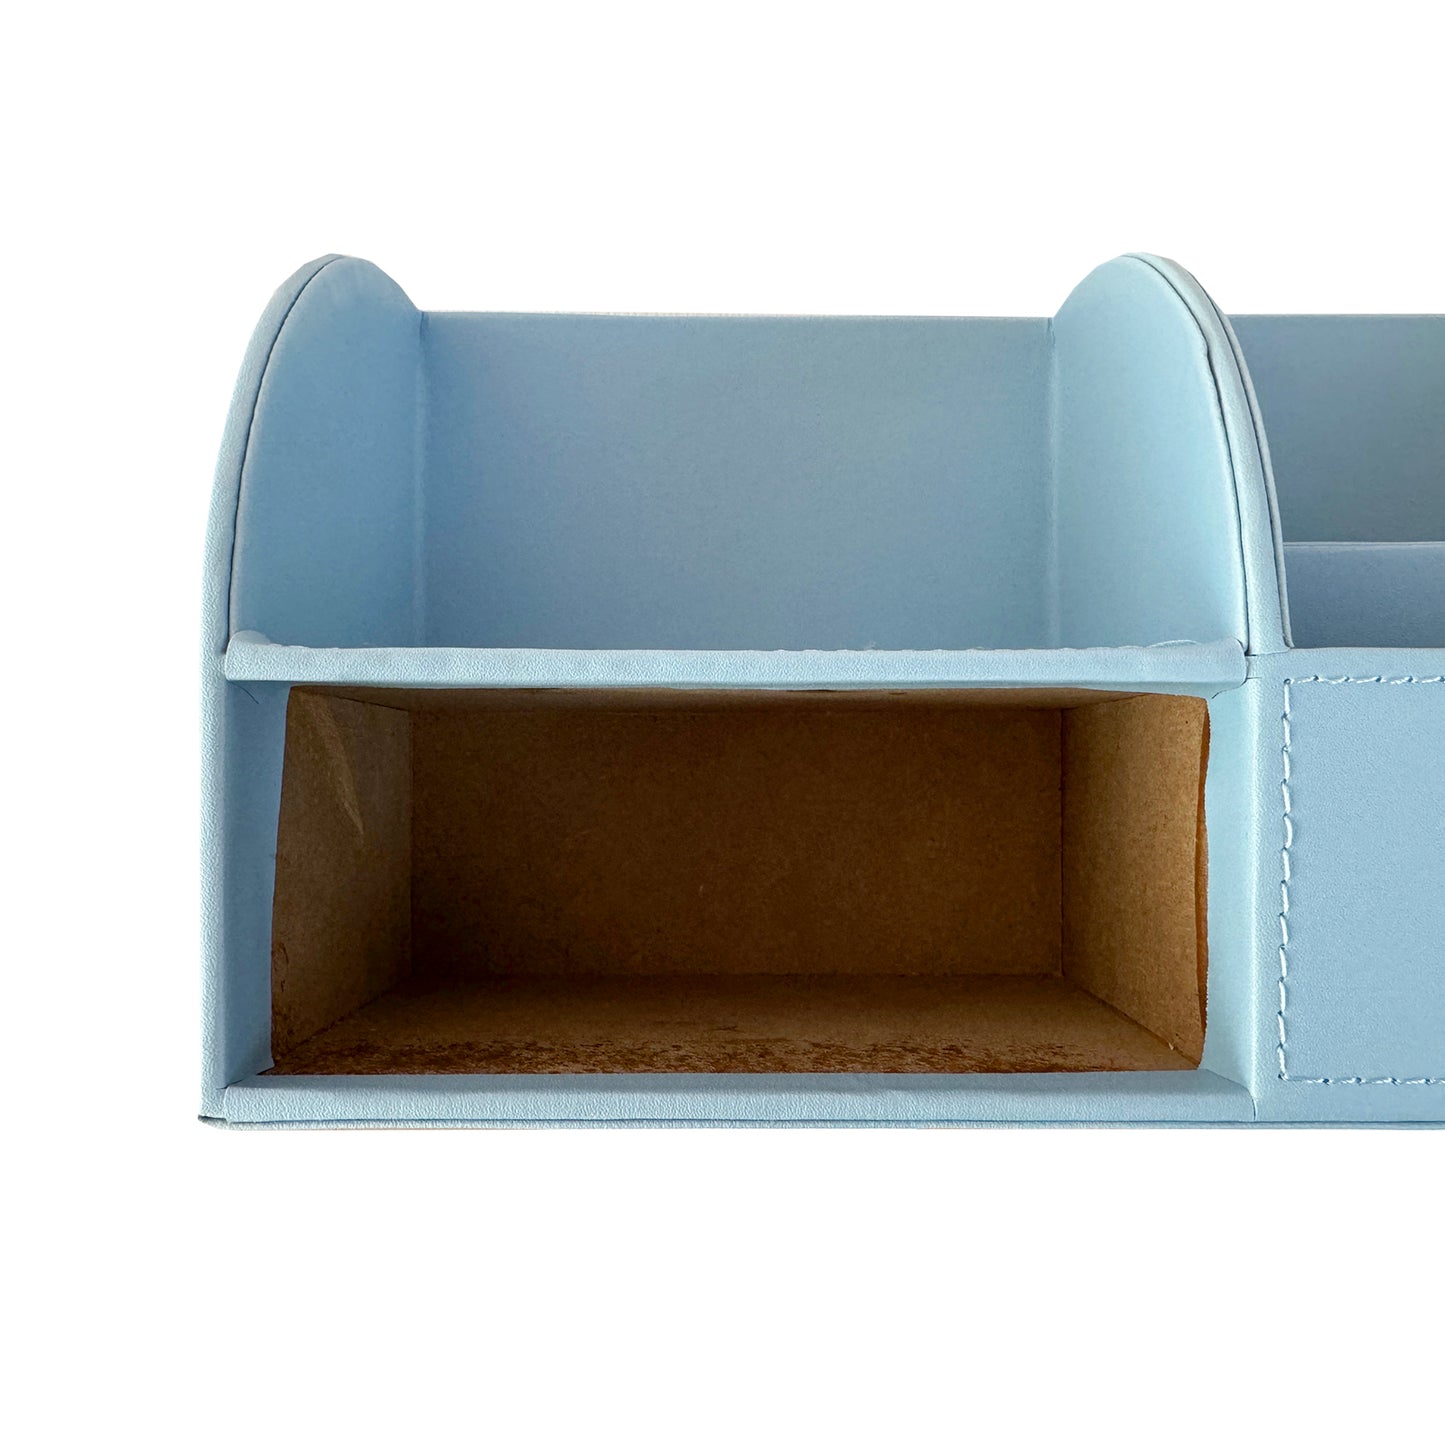 UnionBasic Desk Organizer, Multifunctional Office Leather Desktop Pen Holder Storage Box, Blue